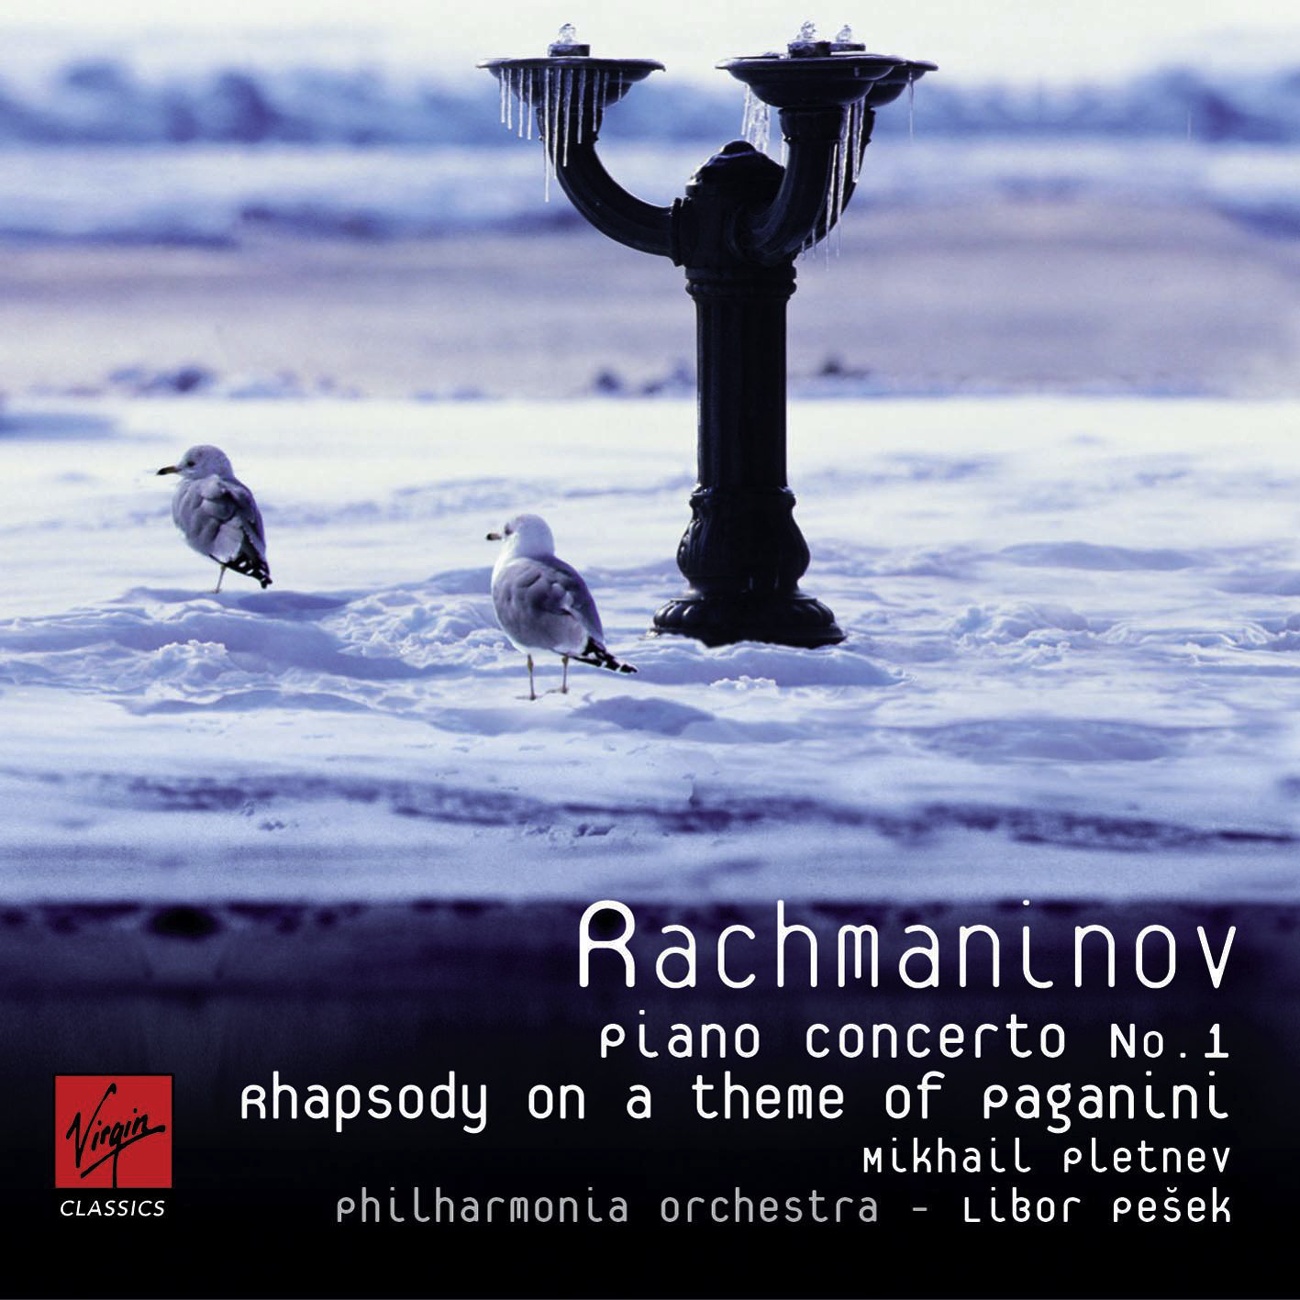 Rhapsody on a Theme of Paganini: Variation VIII - Tempo I